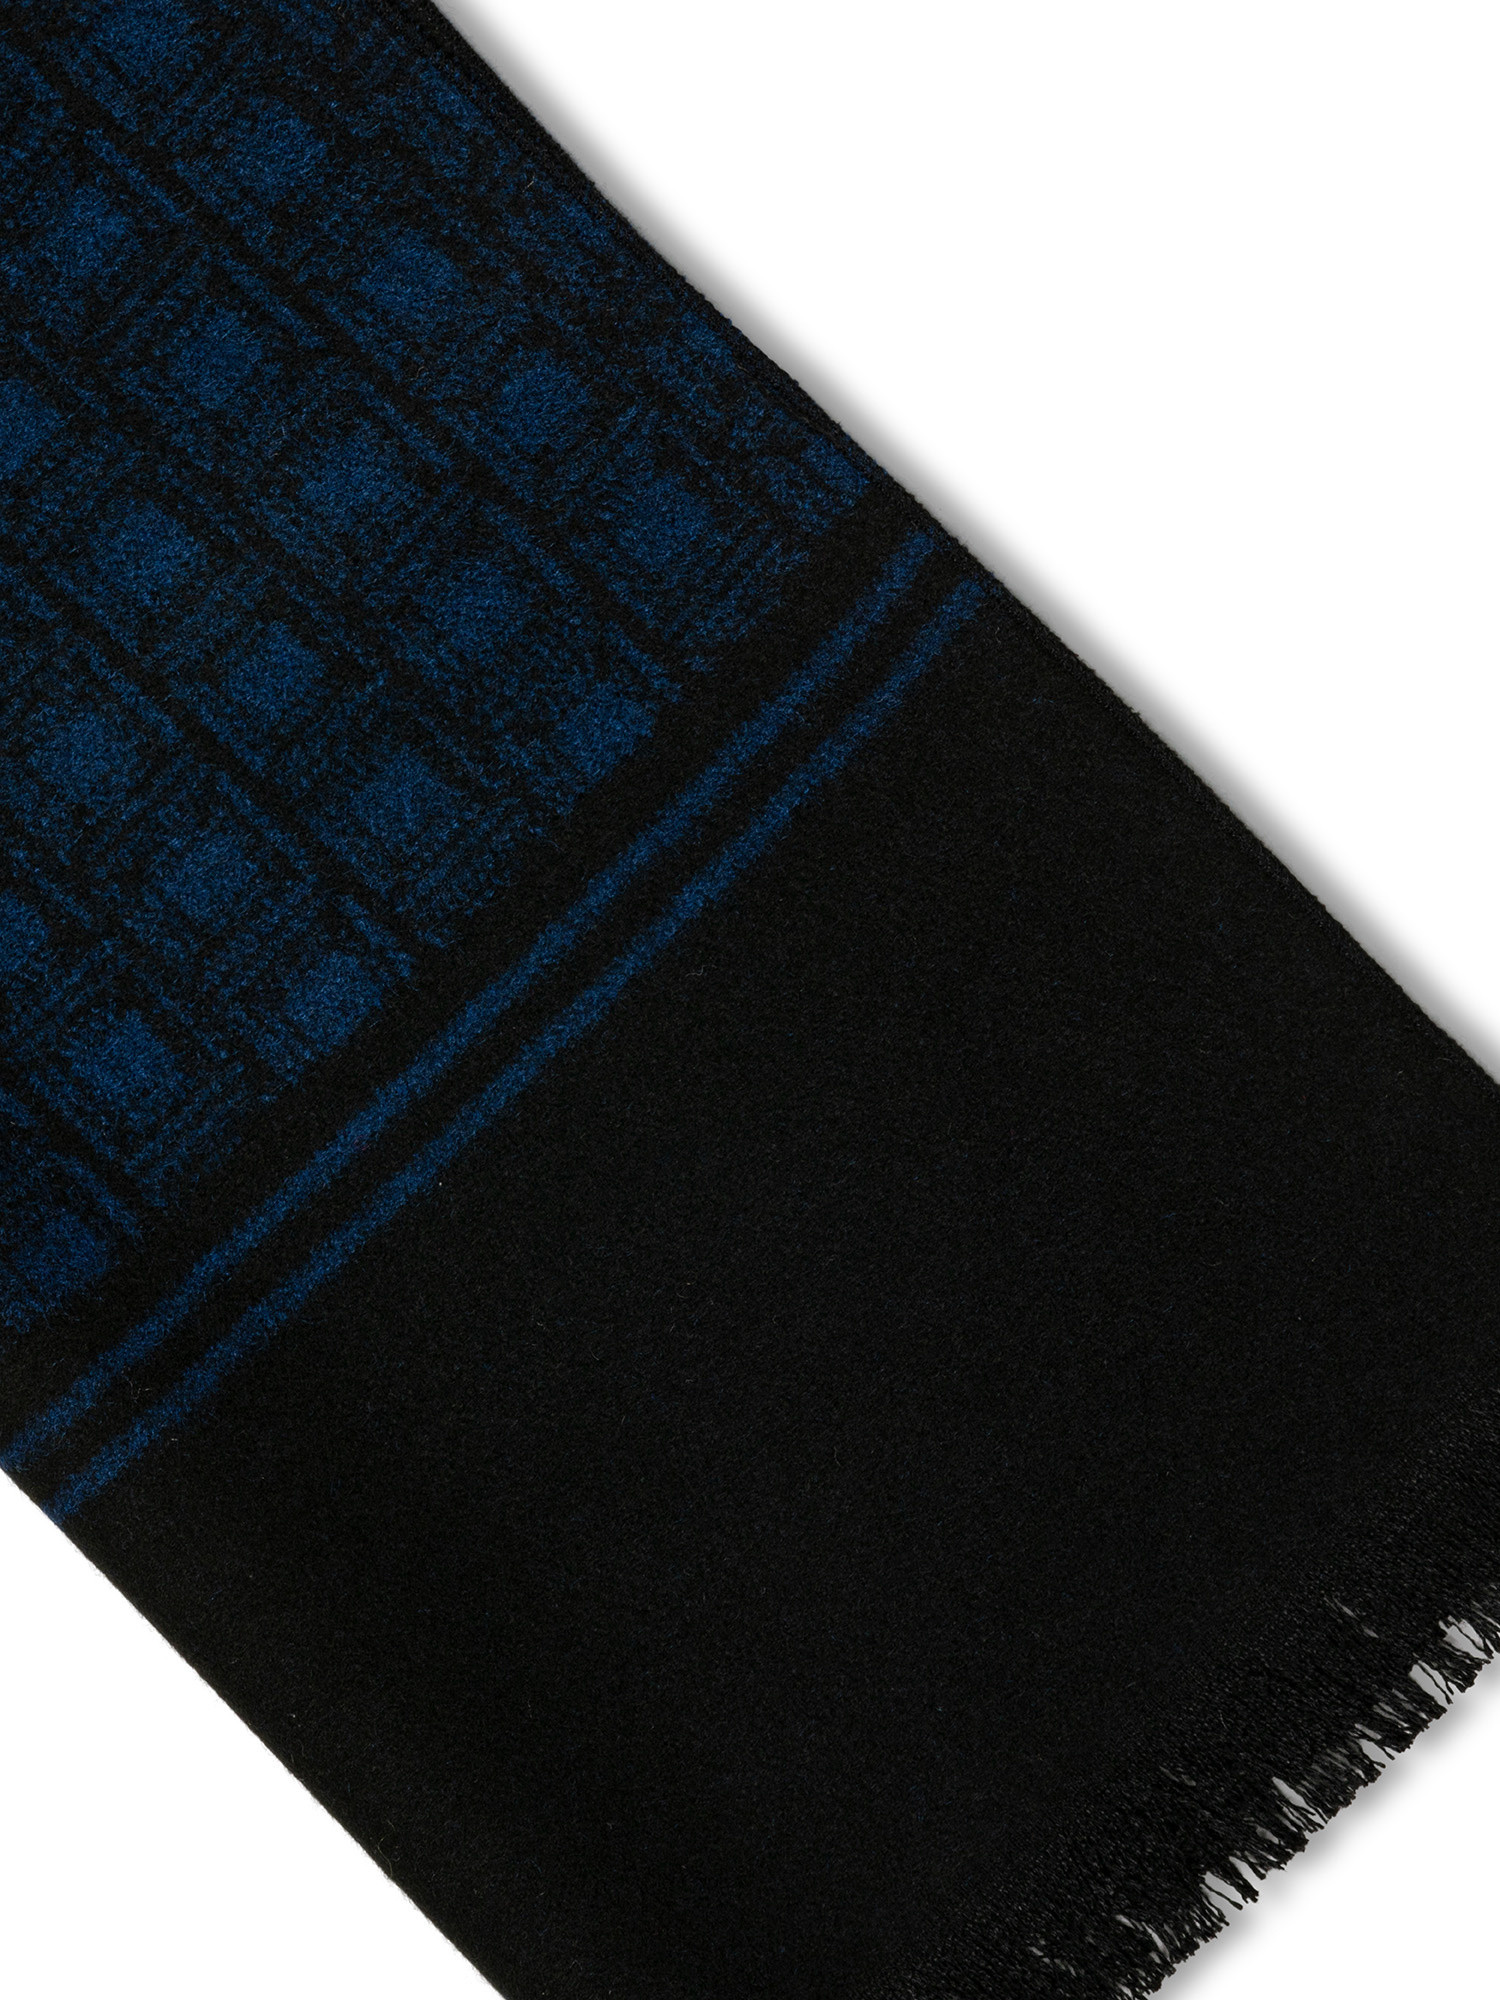 Luca D'Altieri - Patterned scarf, Dark Blue, large image number 1